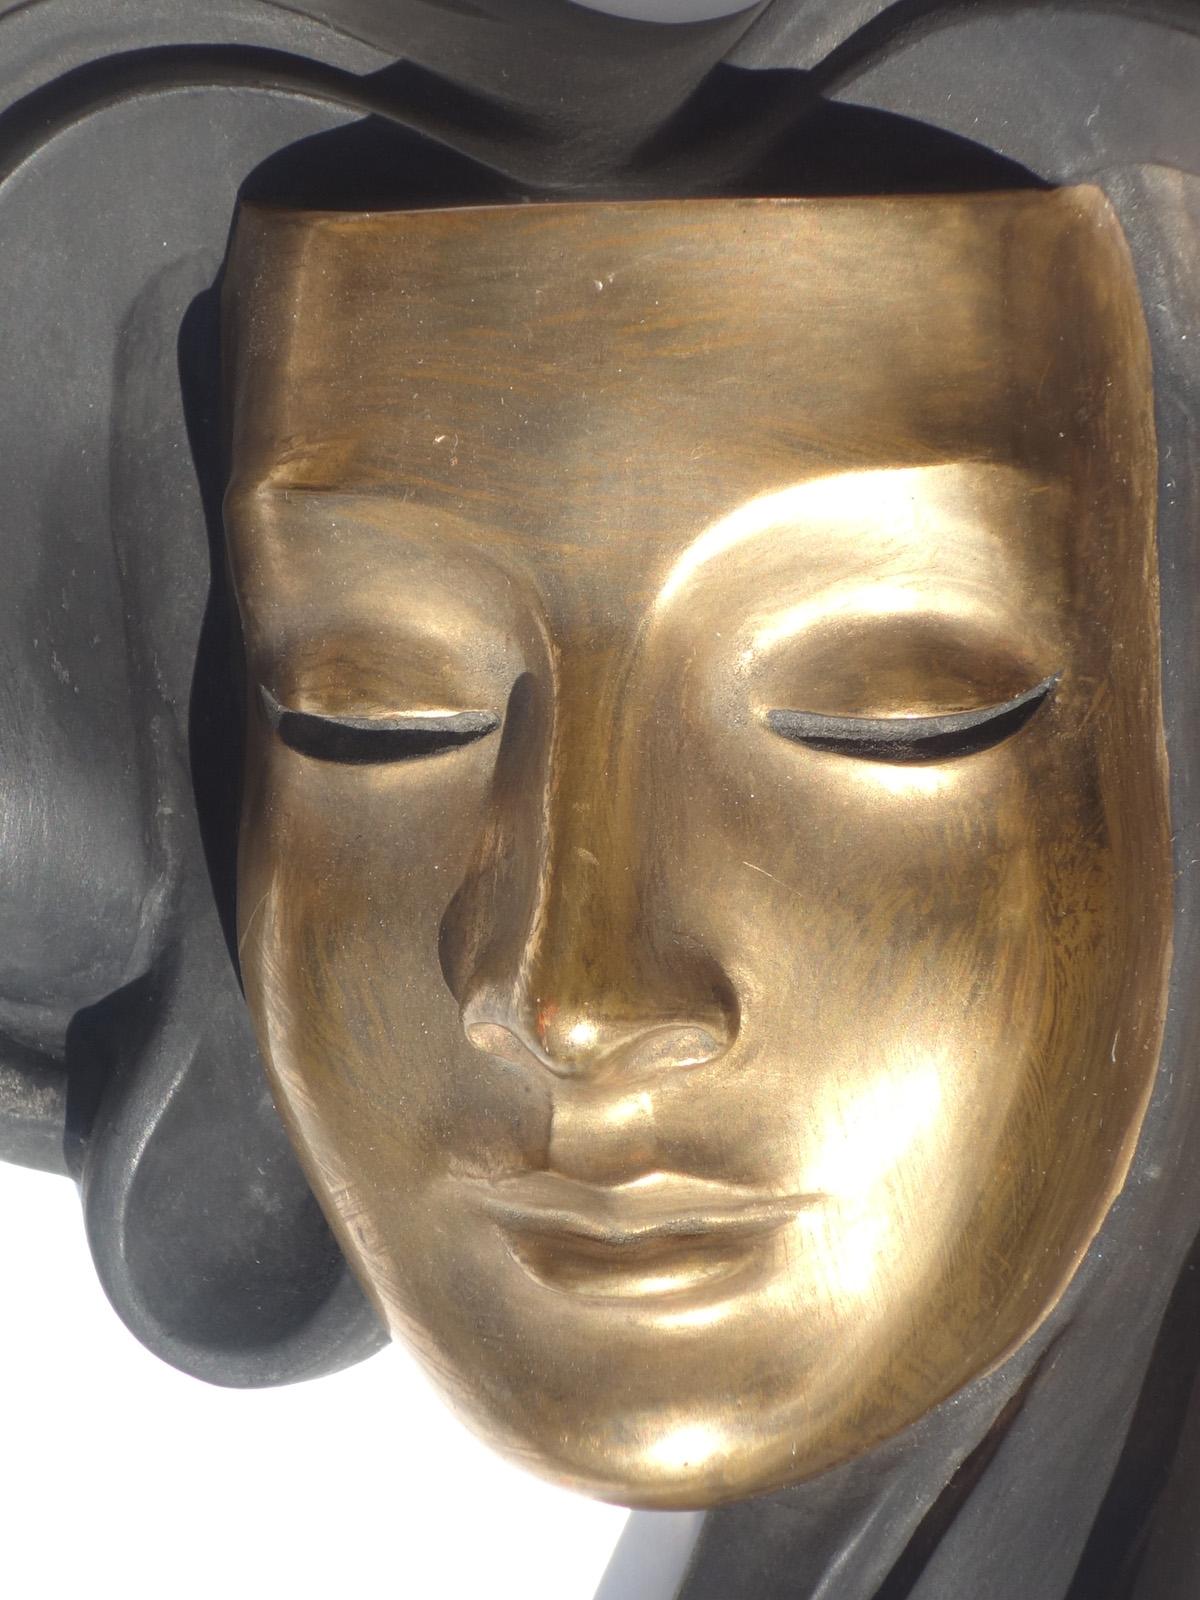 Black and gold ceramic Achatit figure mask.